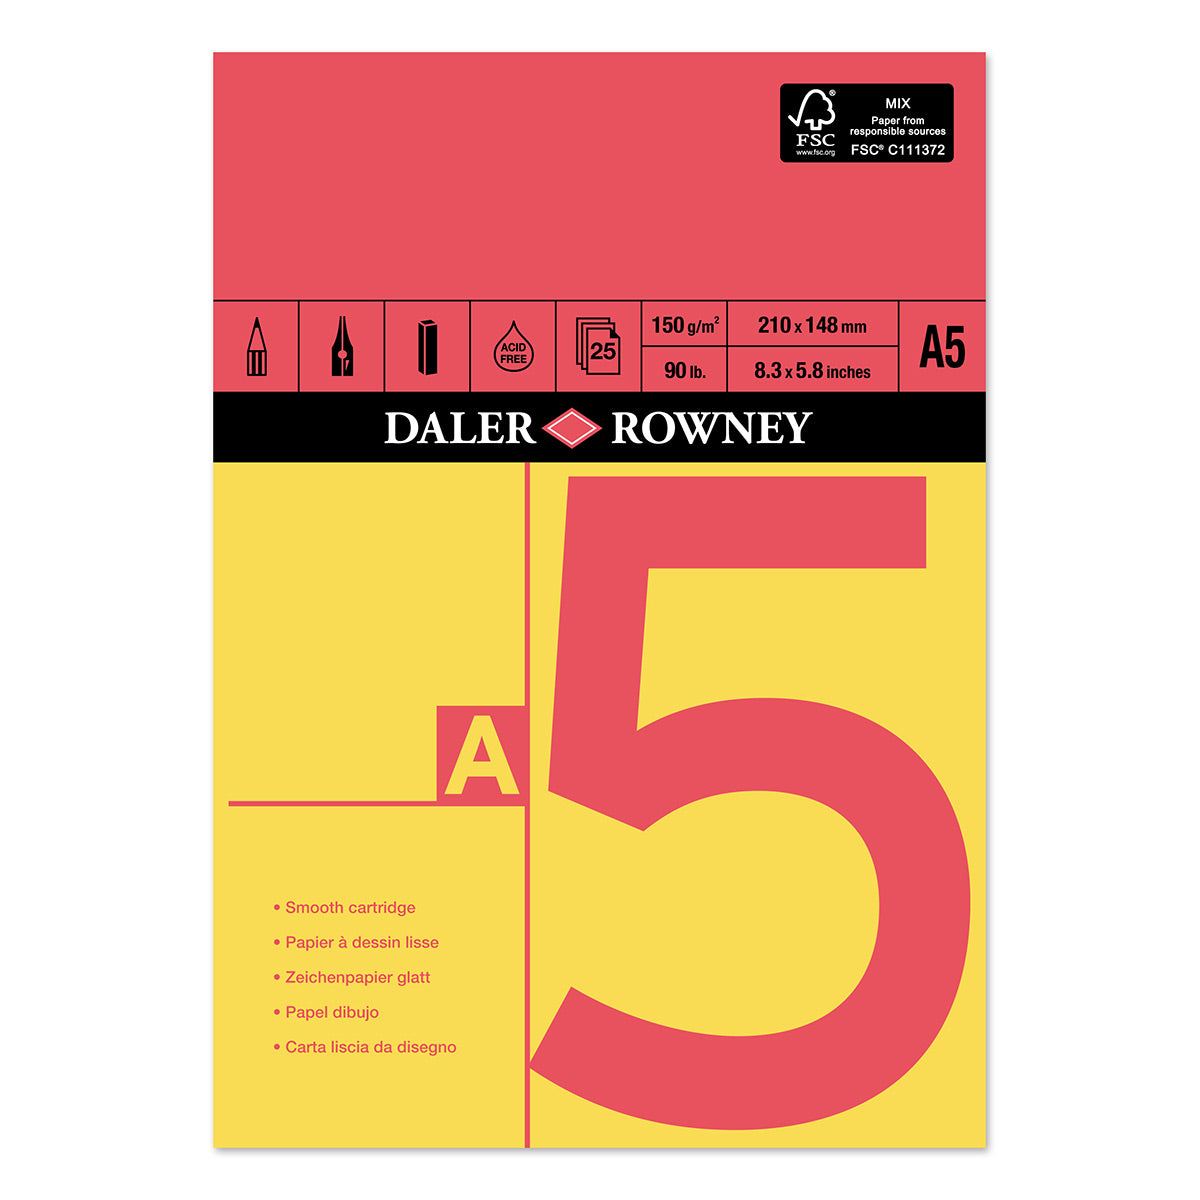 Daler Rowney - Rot & Gelb gummierter Patronen-Skizzenblock - A5 - 150 g/m²